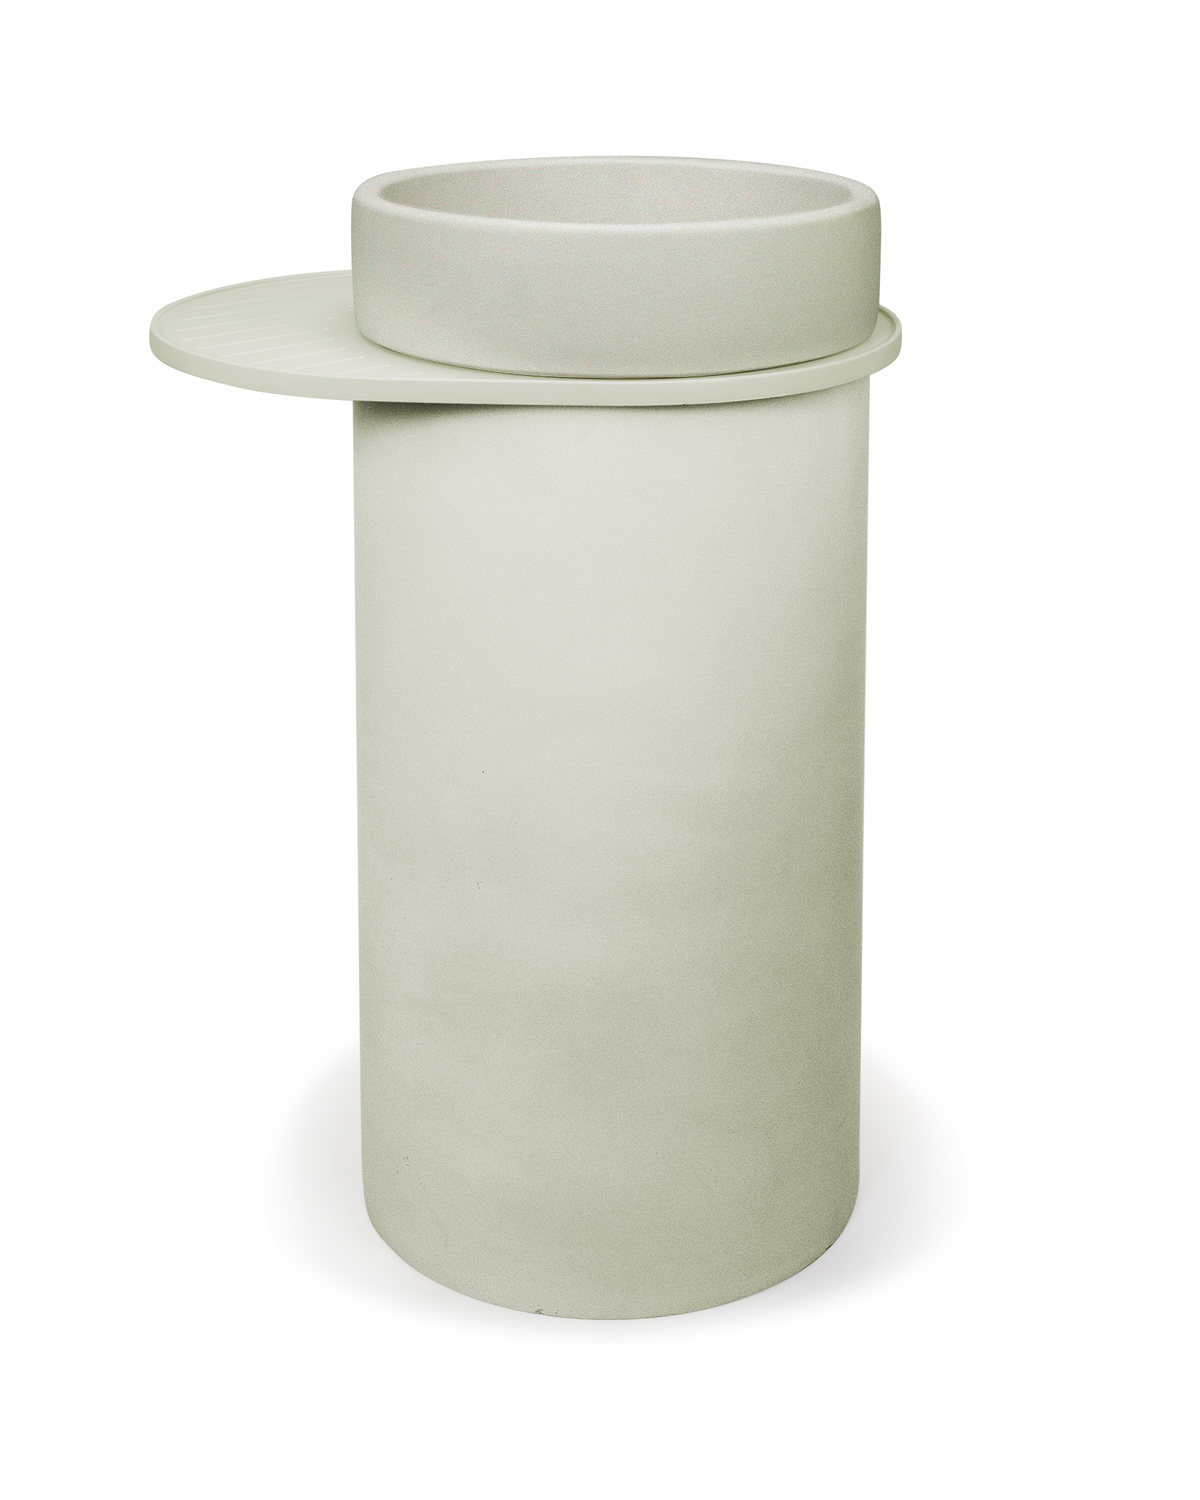 Cylinder - Bowl Basin (Sand)